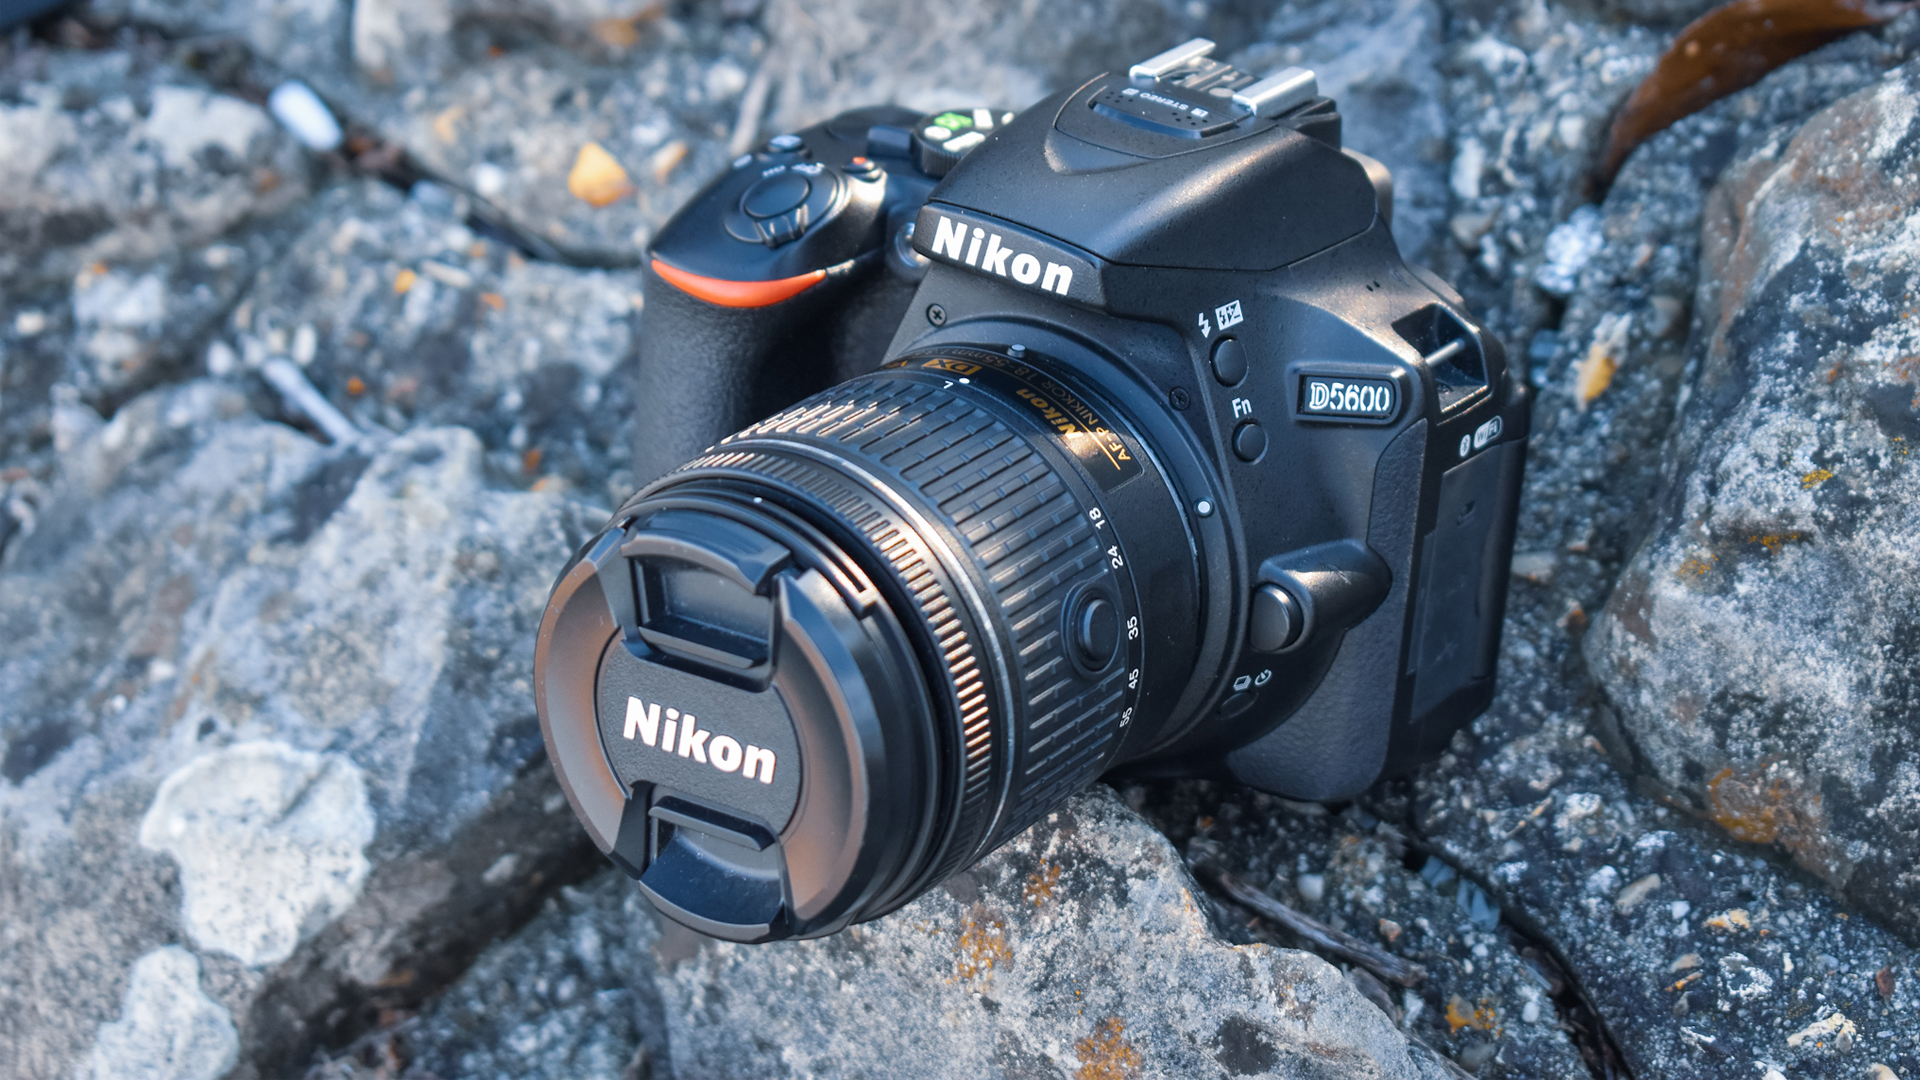 Nikon D5600 camera rests on the rocks